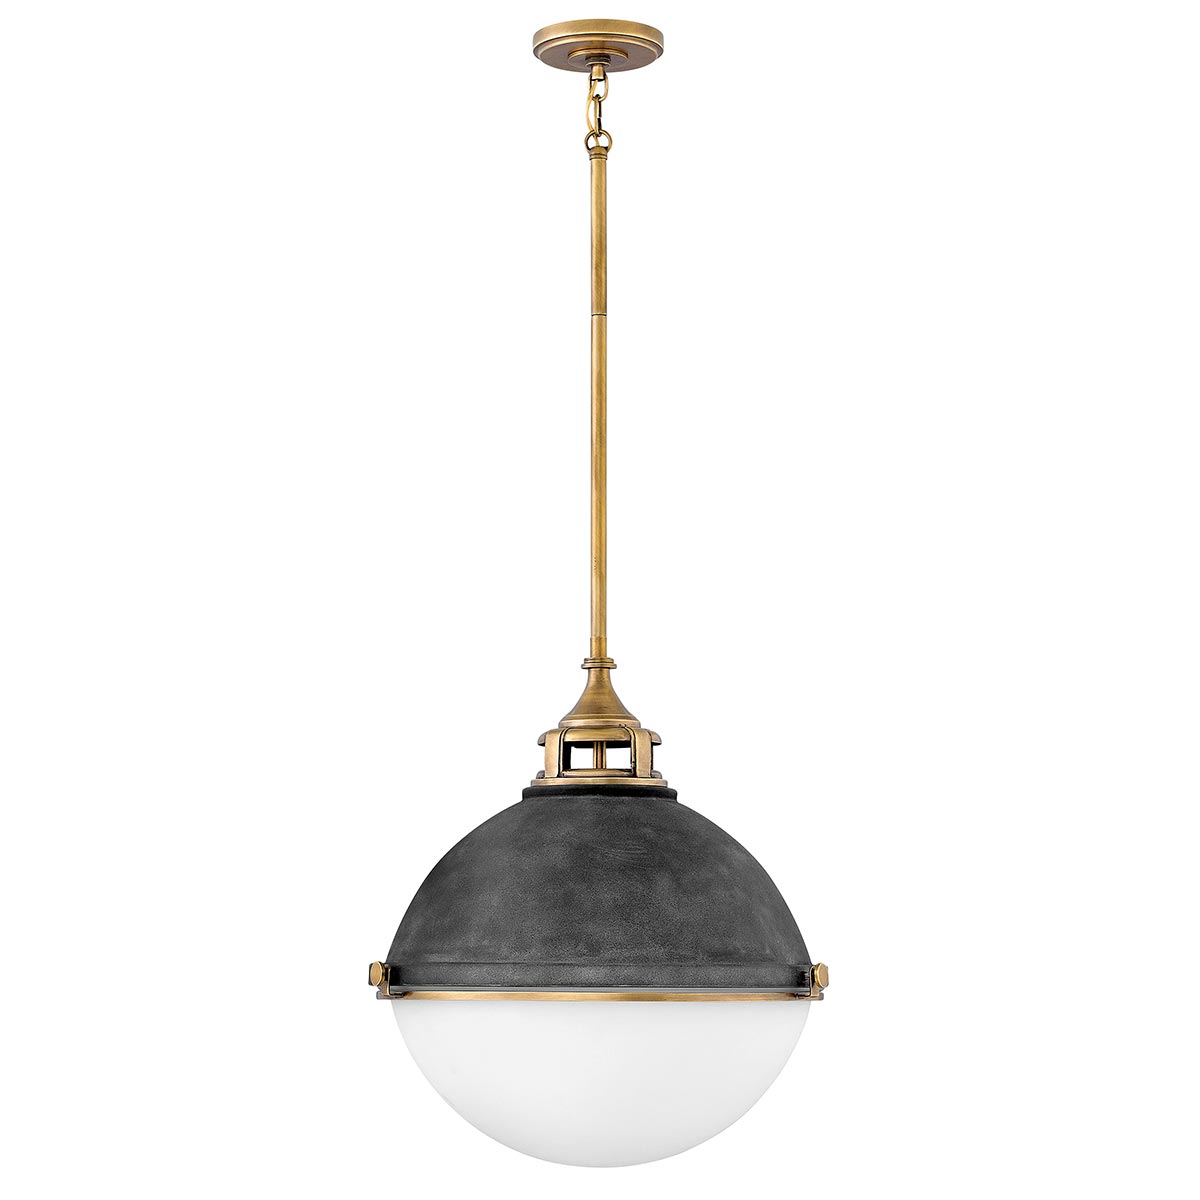 Fletcher Industrial Aged Zinc 3 Light Globe Ceiling Pendant Heritage Brass